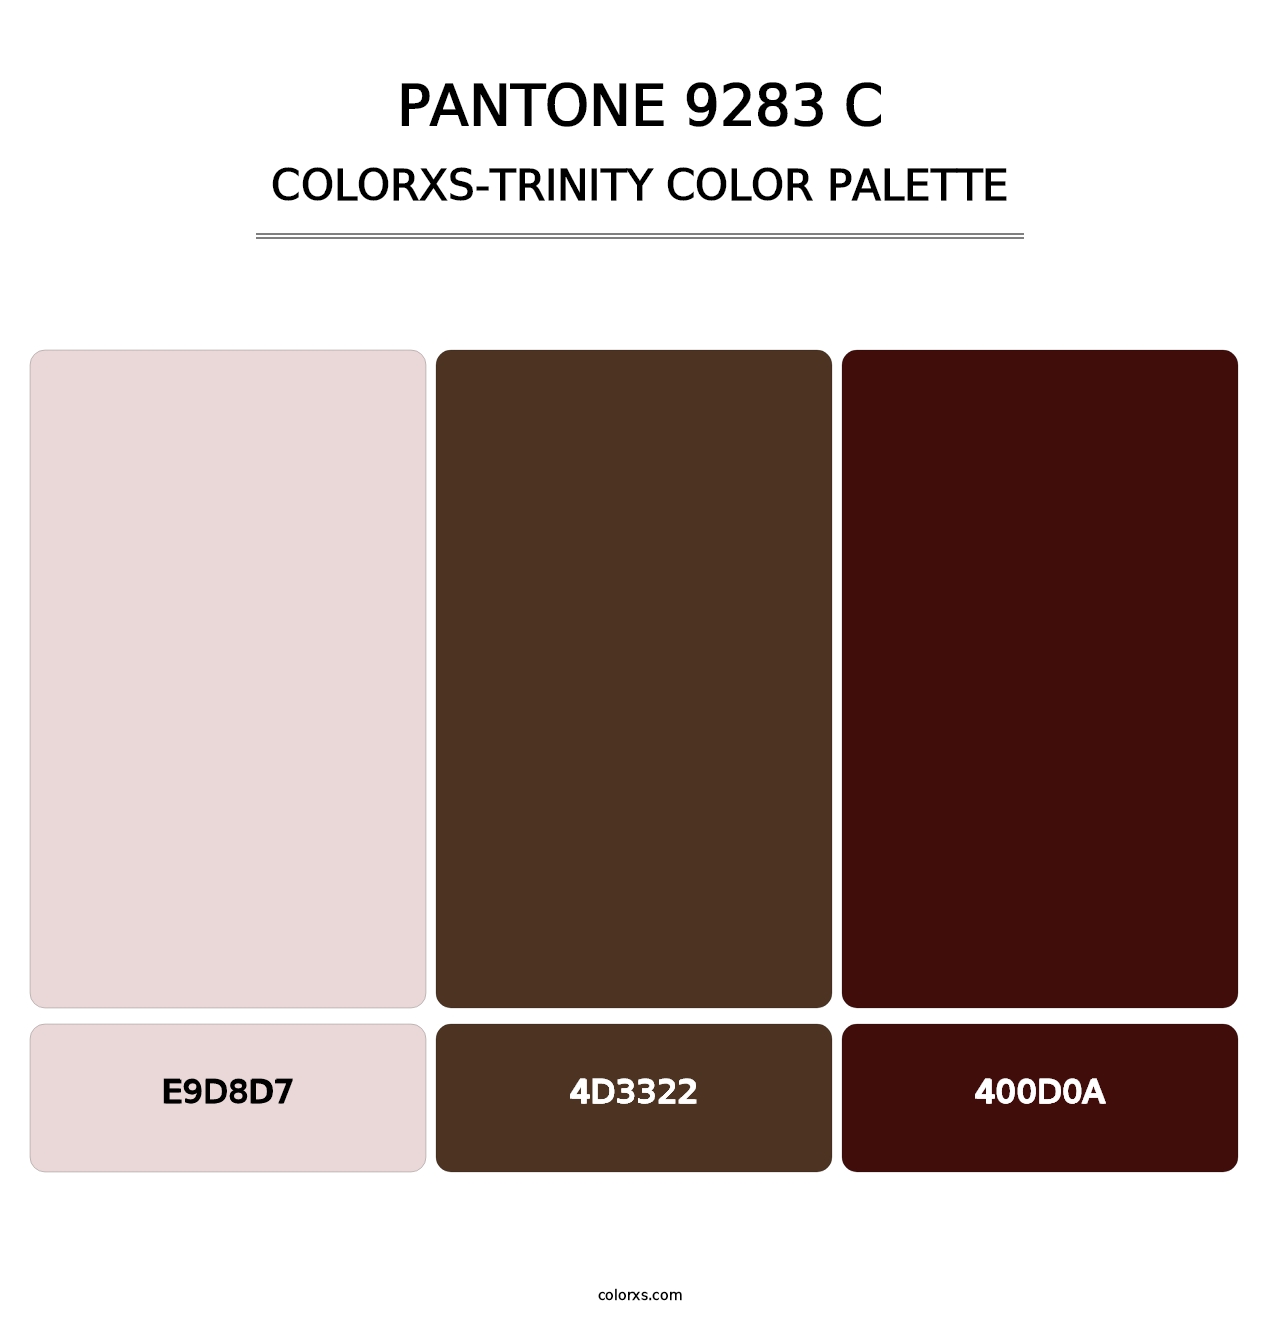 PANTONE 9283 C - Colorxs Trinity Palette